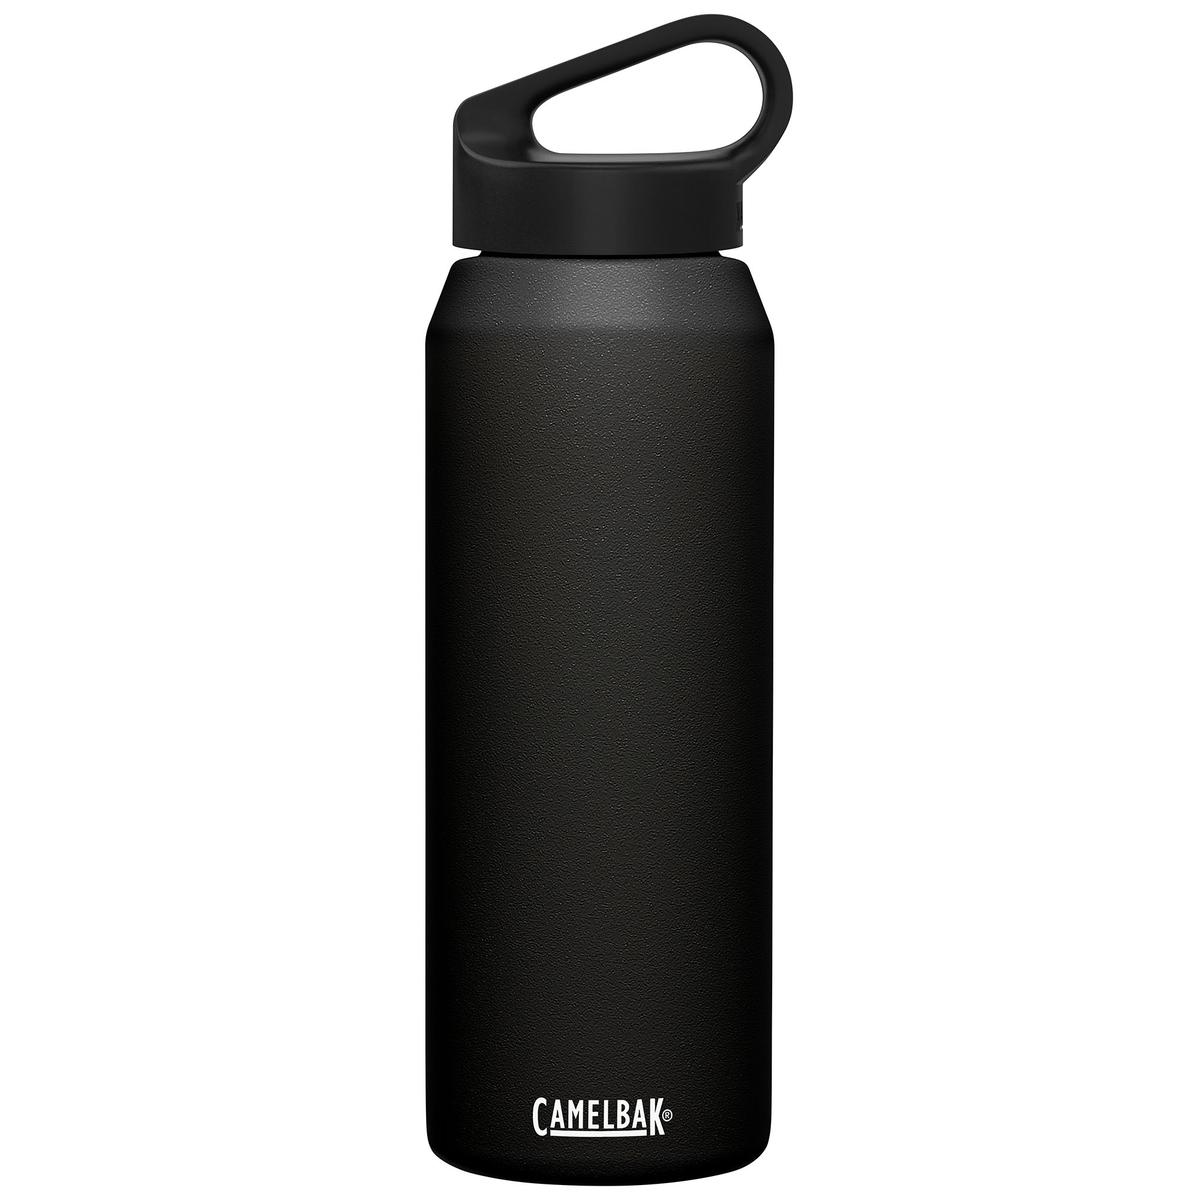 CamelBak Carry Cap 32 oz Bottle Insulated Stainless Steel White